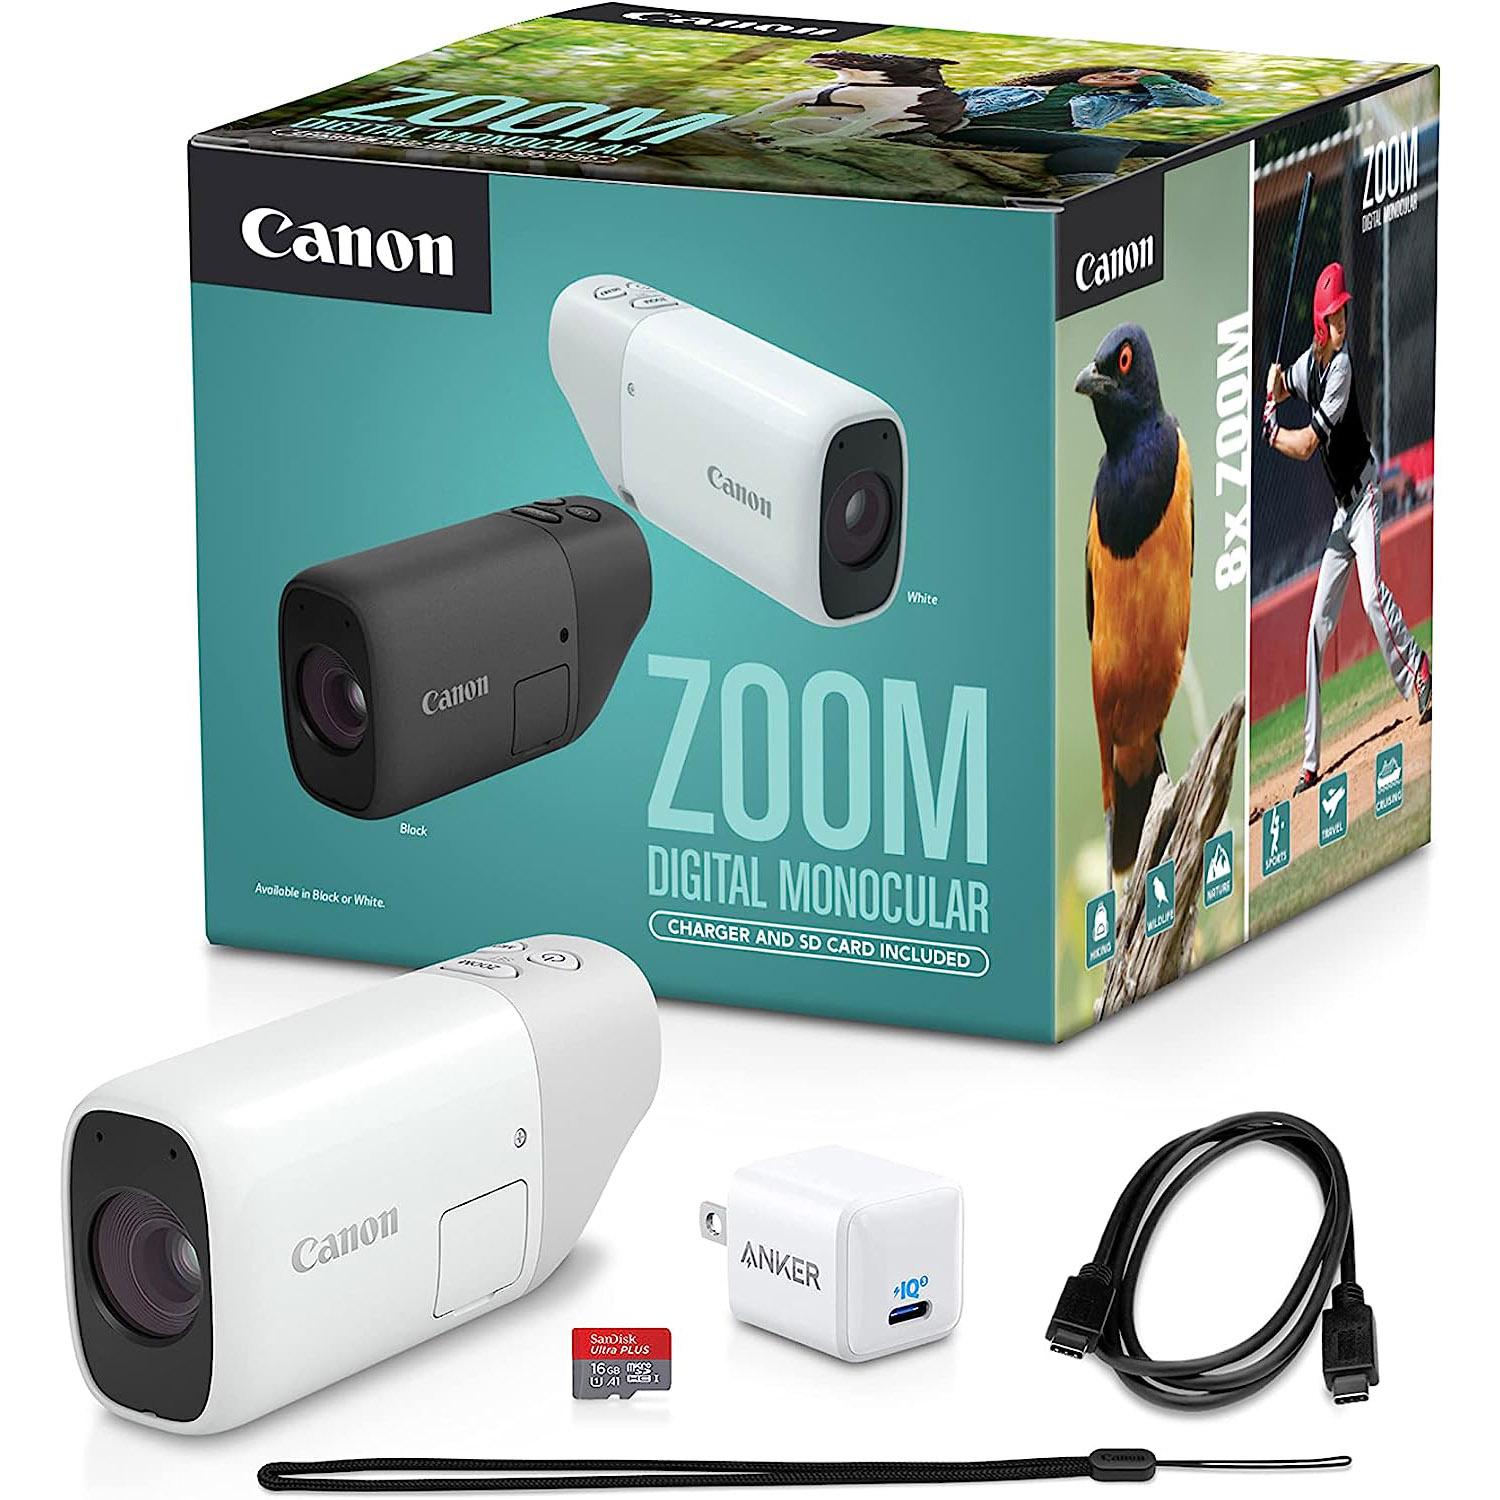 Canon Zoom Digital Monocular Kit Bundle for $189 Shipped